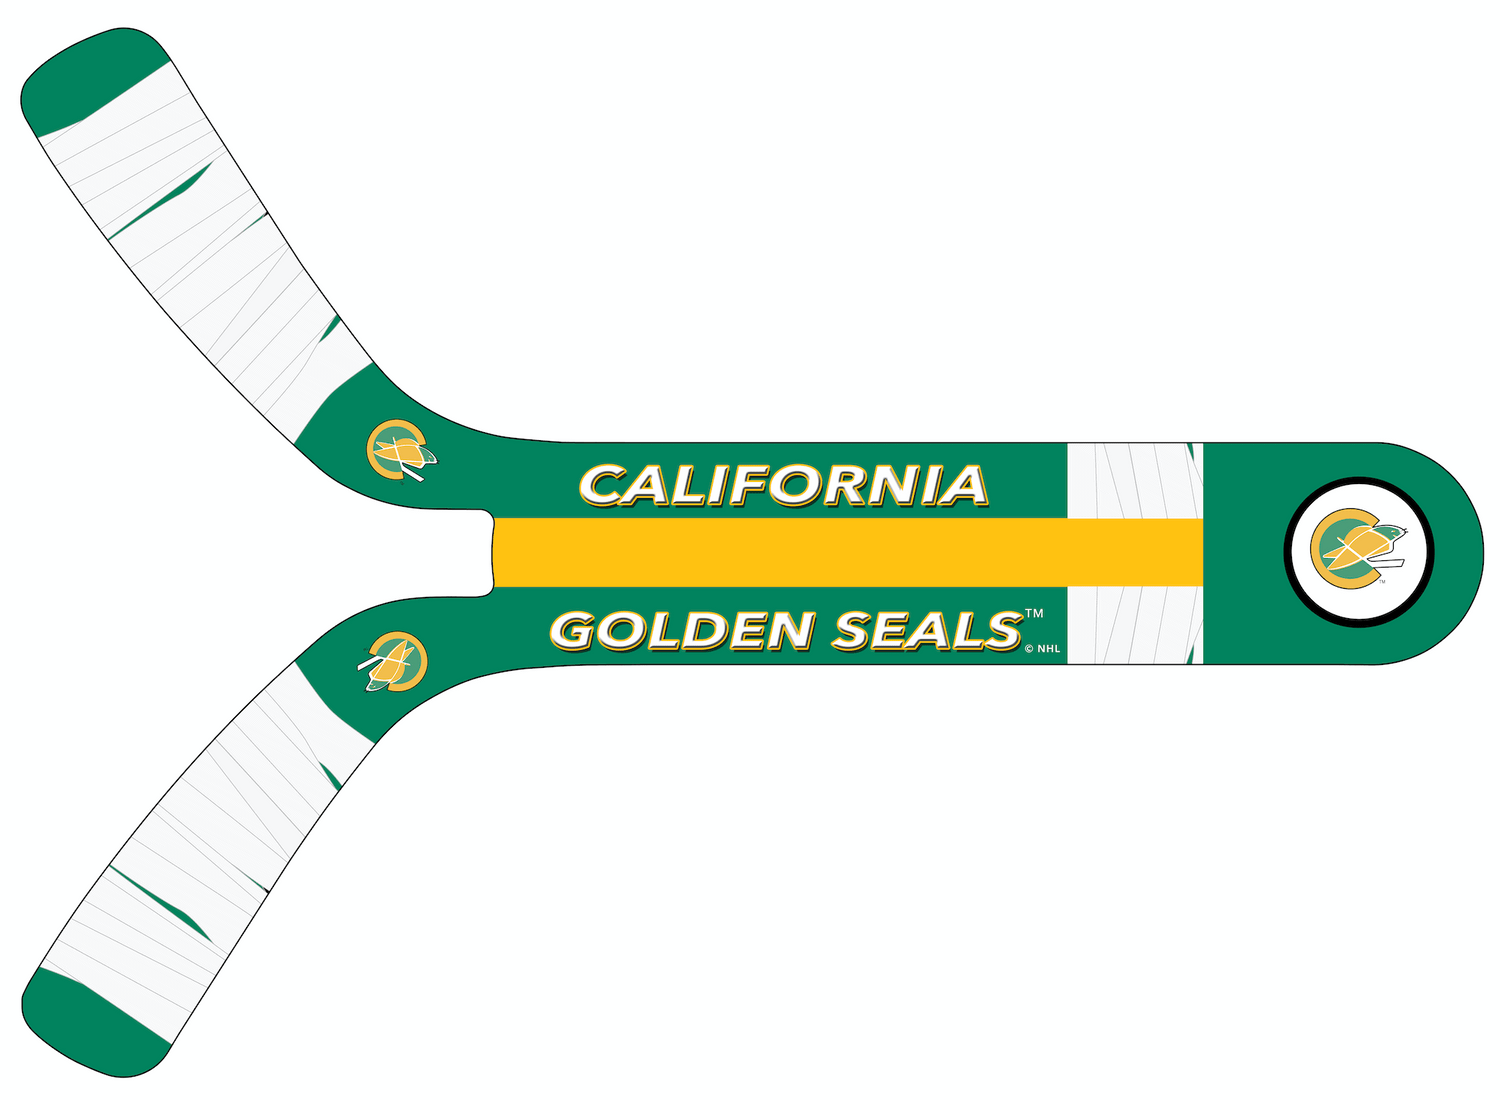 Bay Area fans still remember long-gone Golden Seals